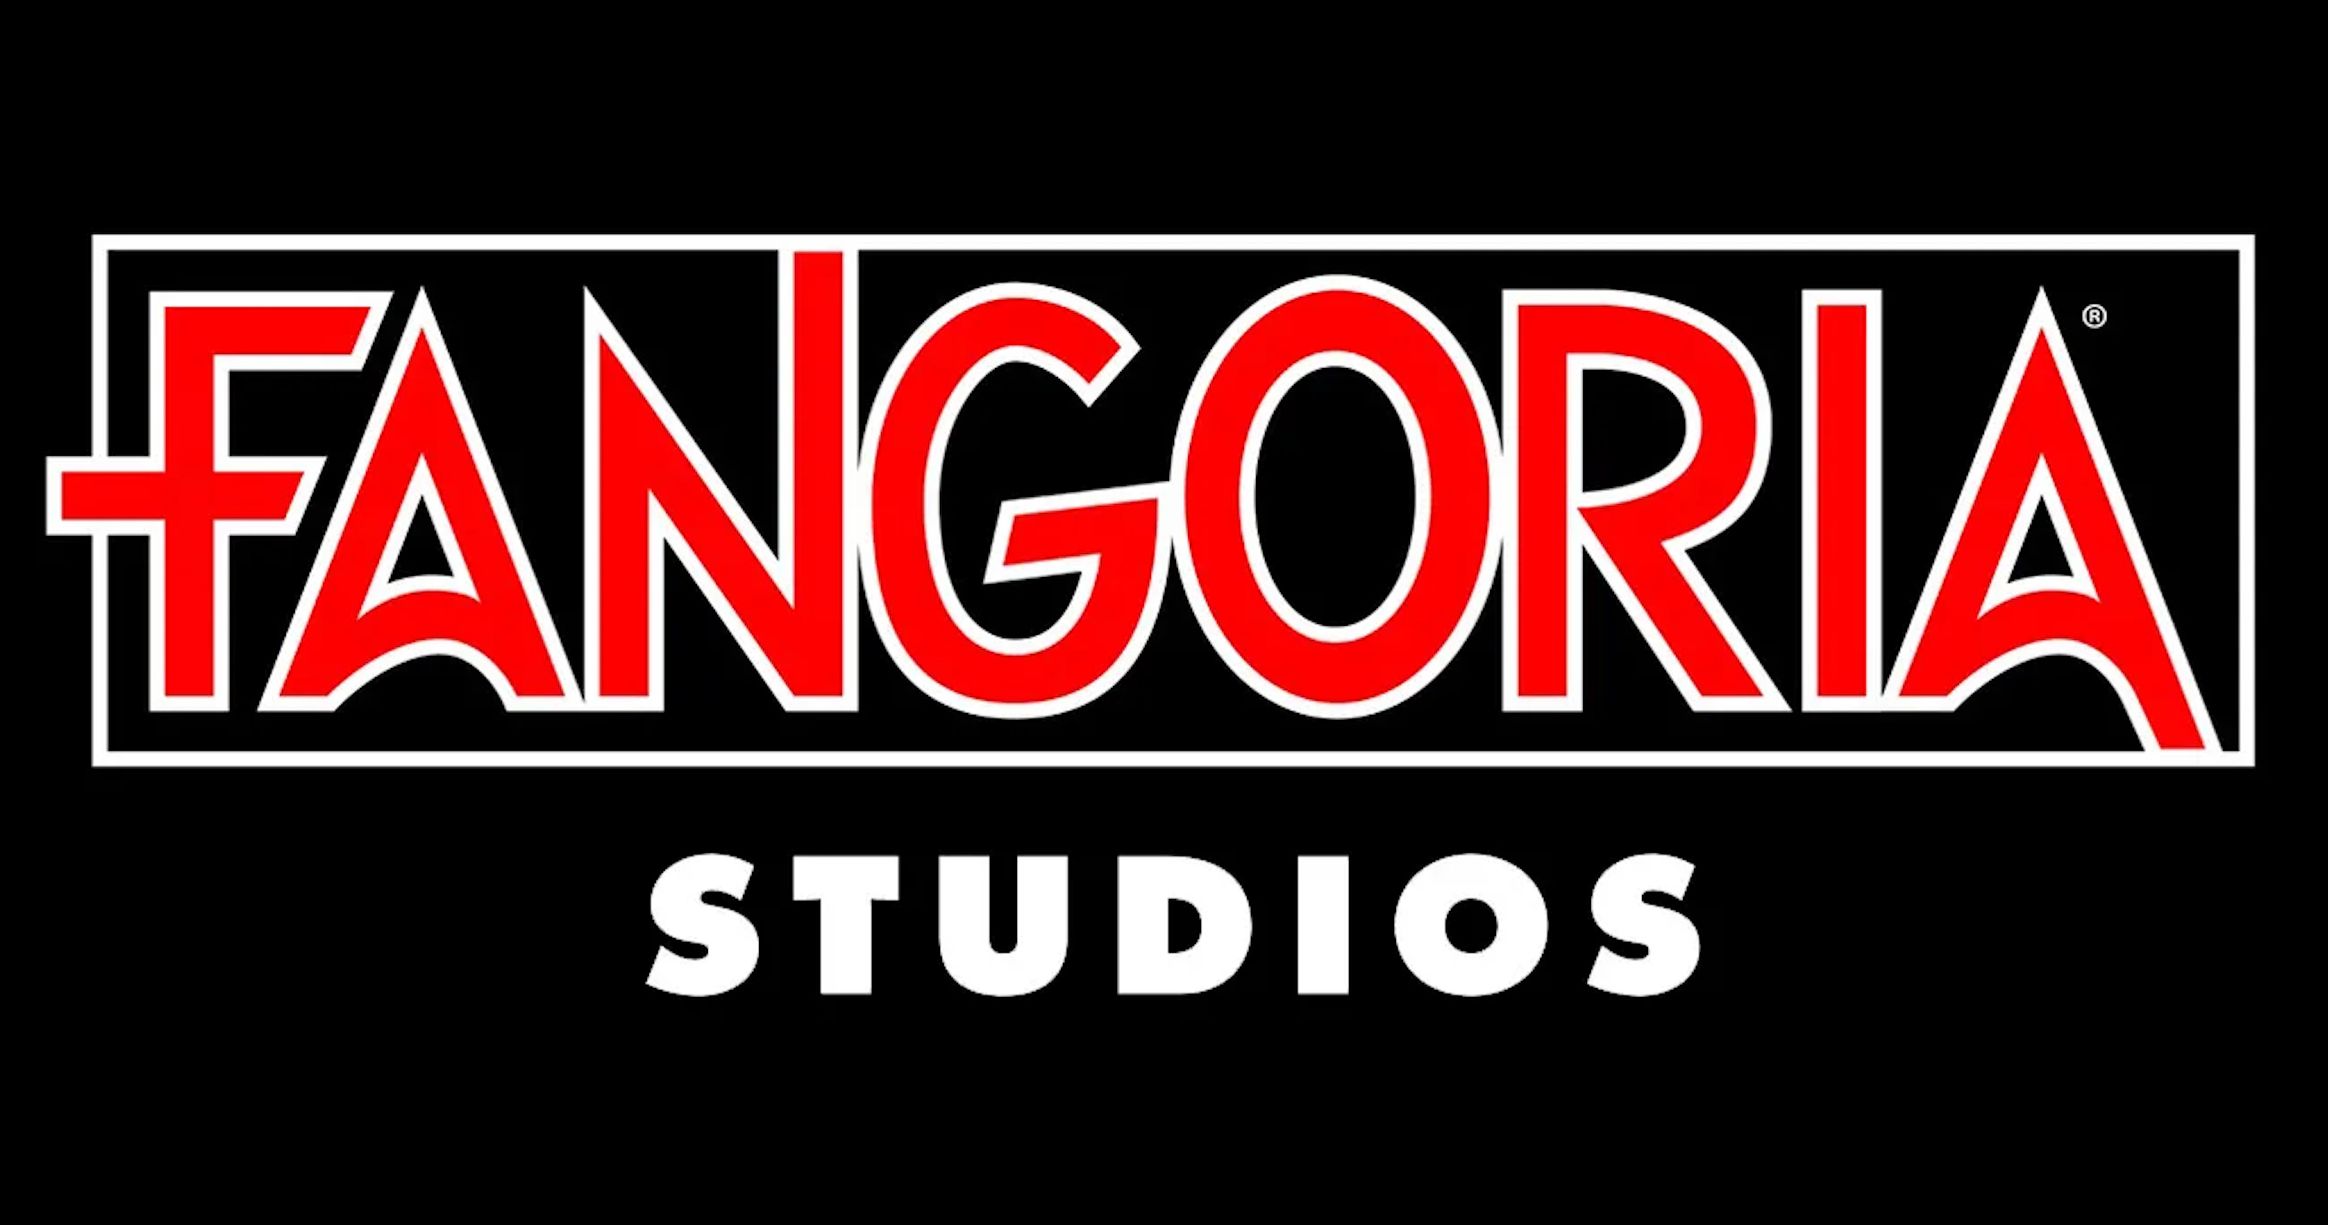 Fangoria Studios Announces First Movie with Creature Feature Sitora